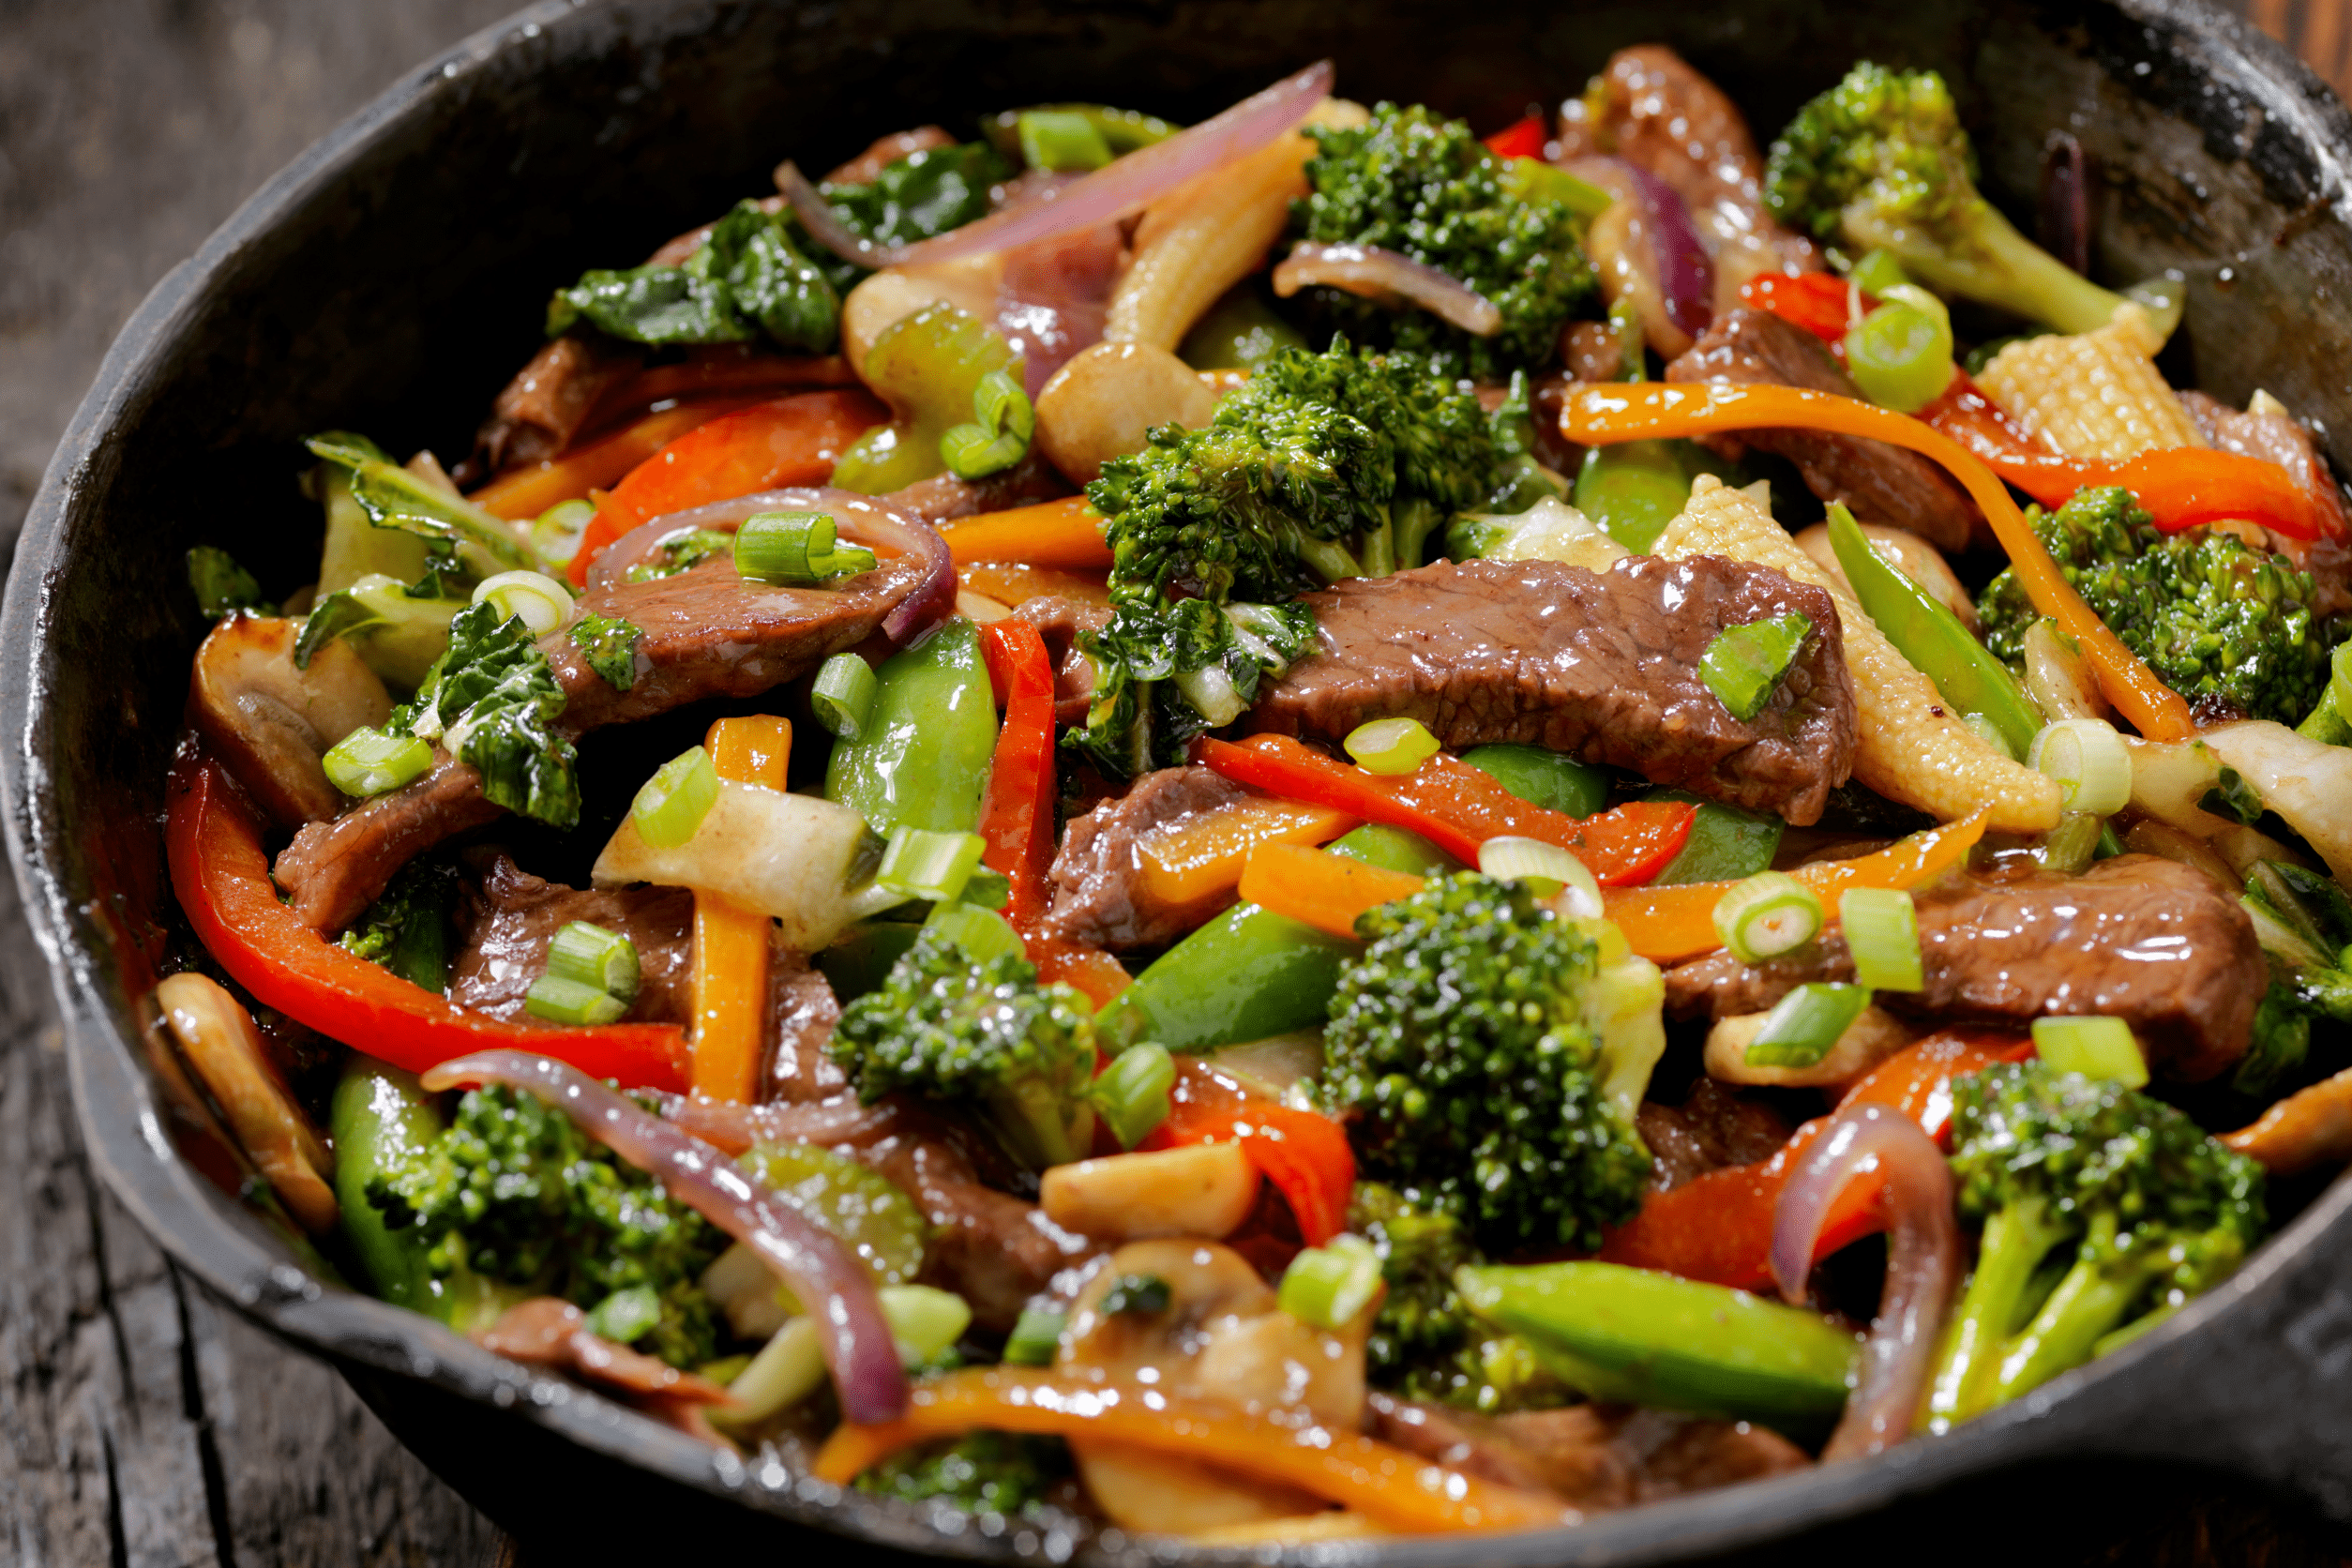 Beef broccoli recipe of kitch mystic ct